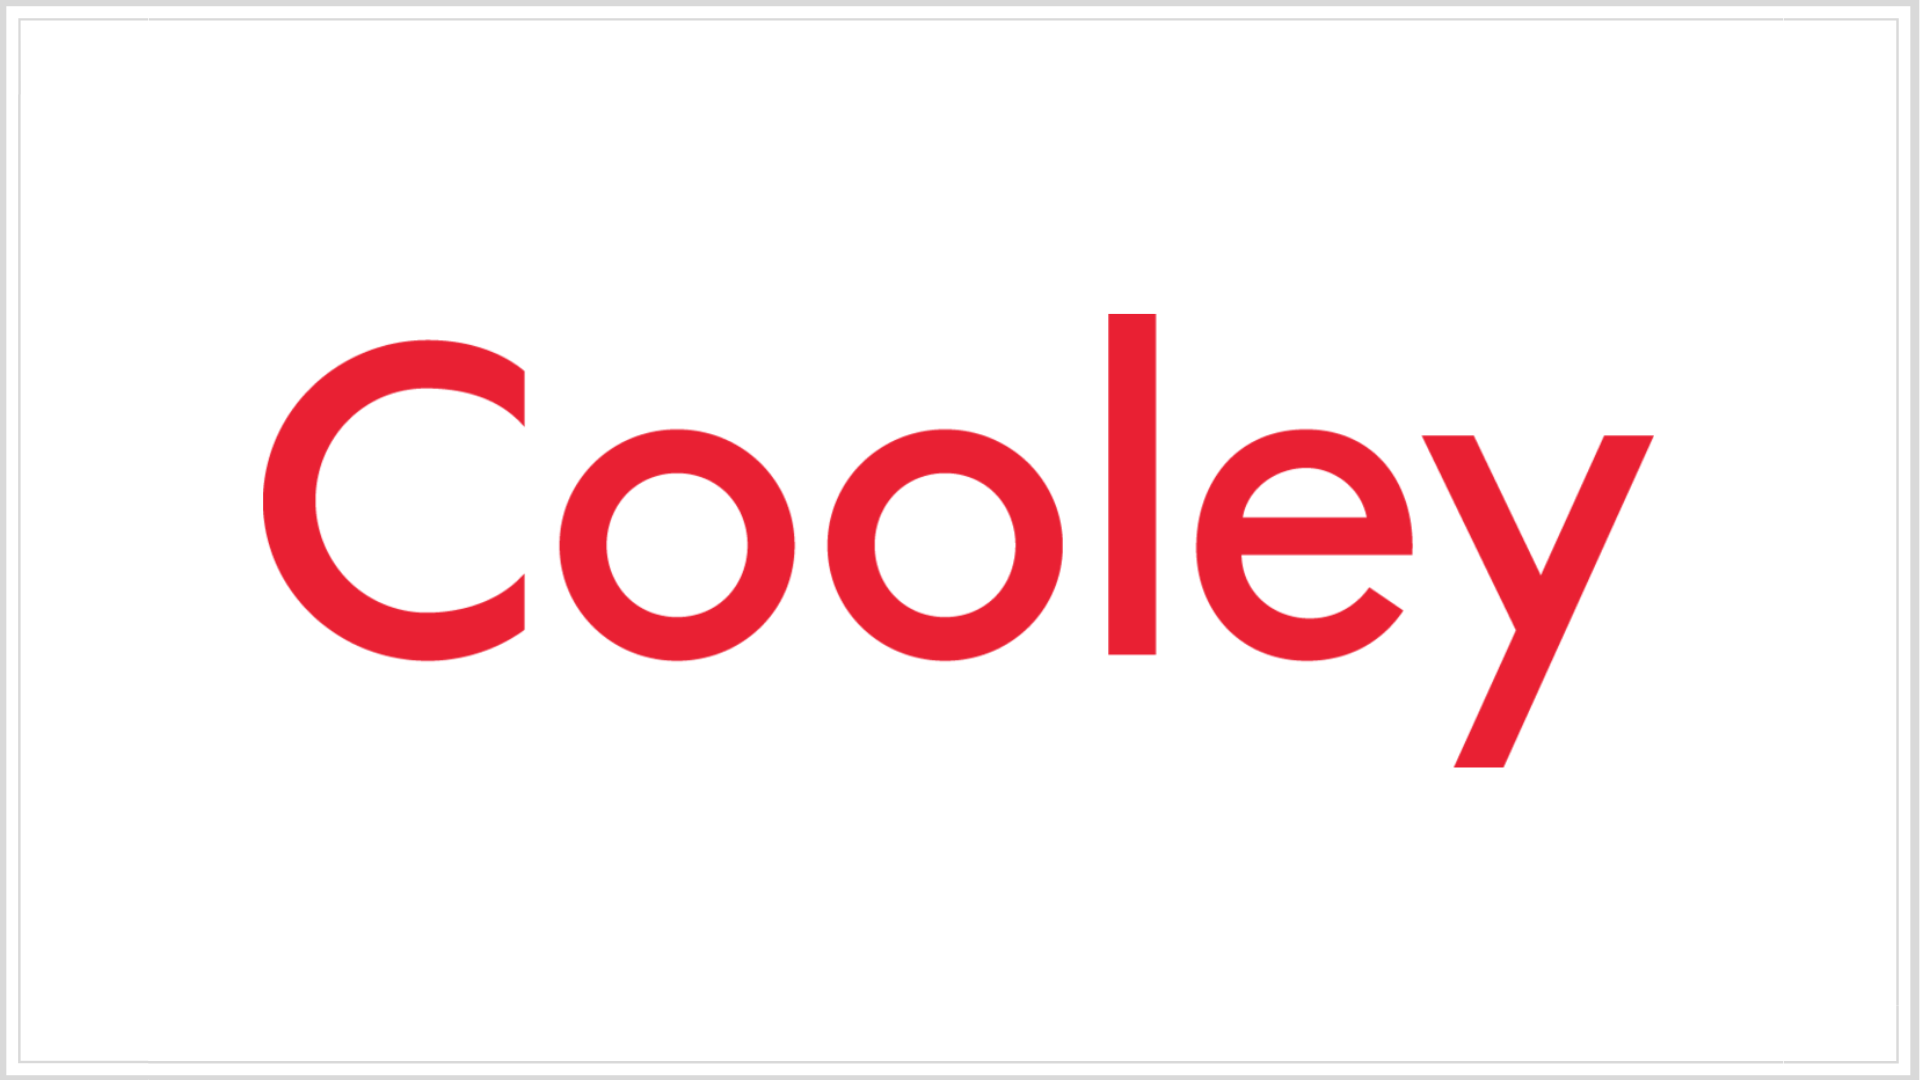 Cooley – 16 x 9